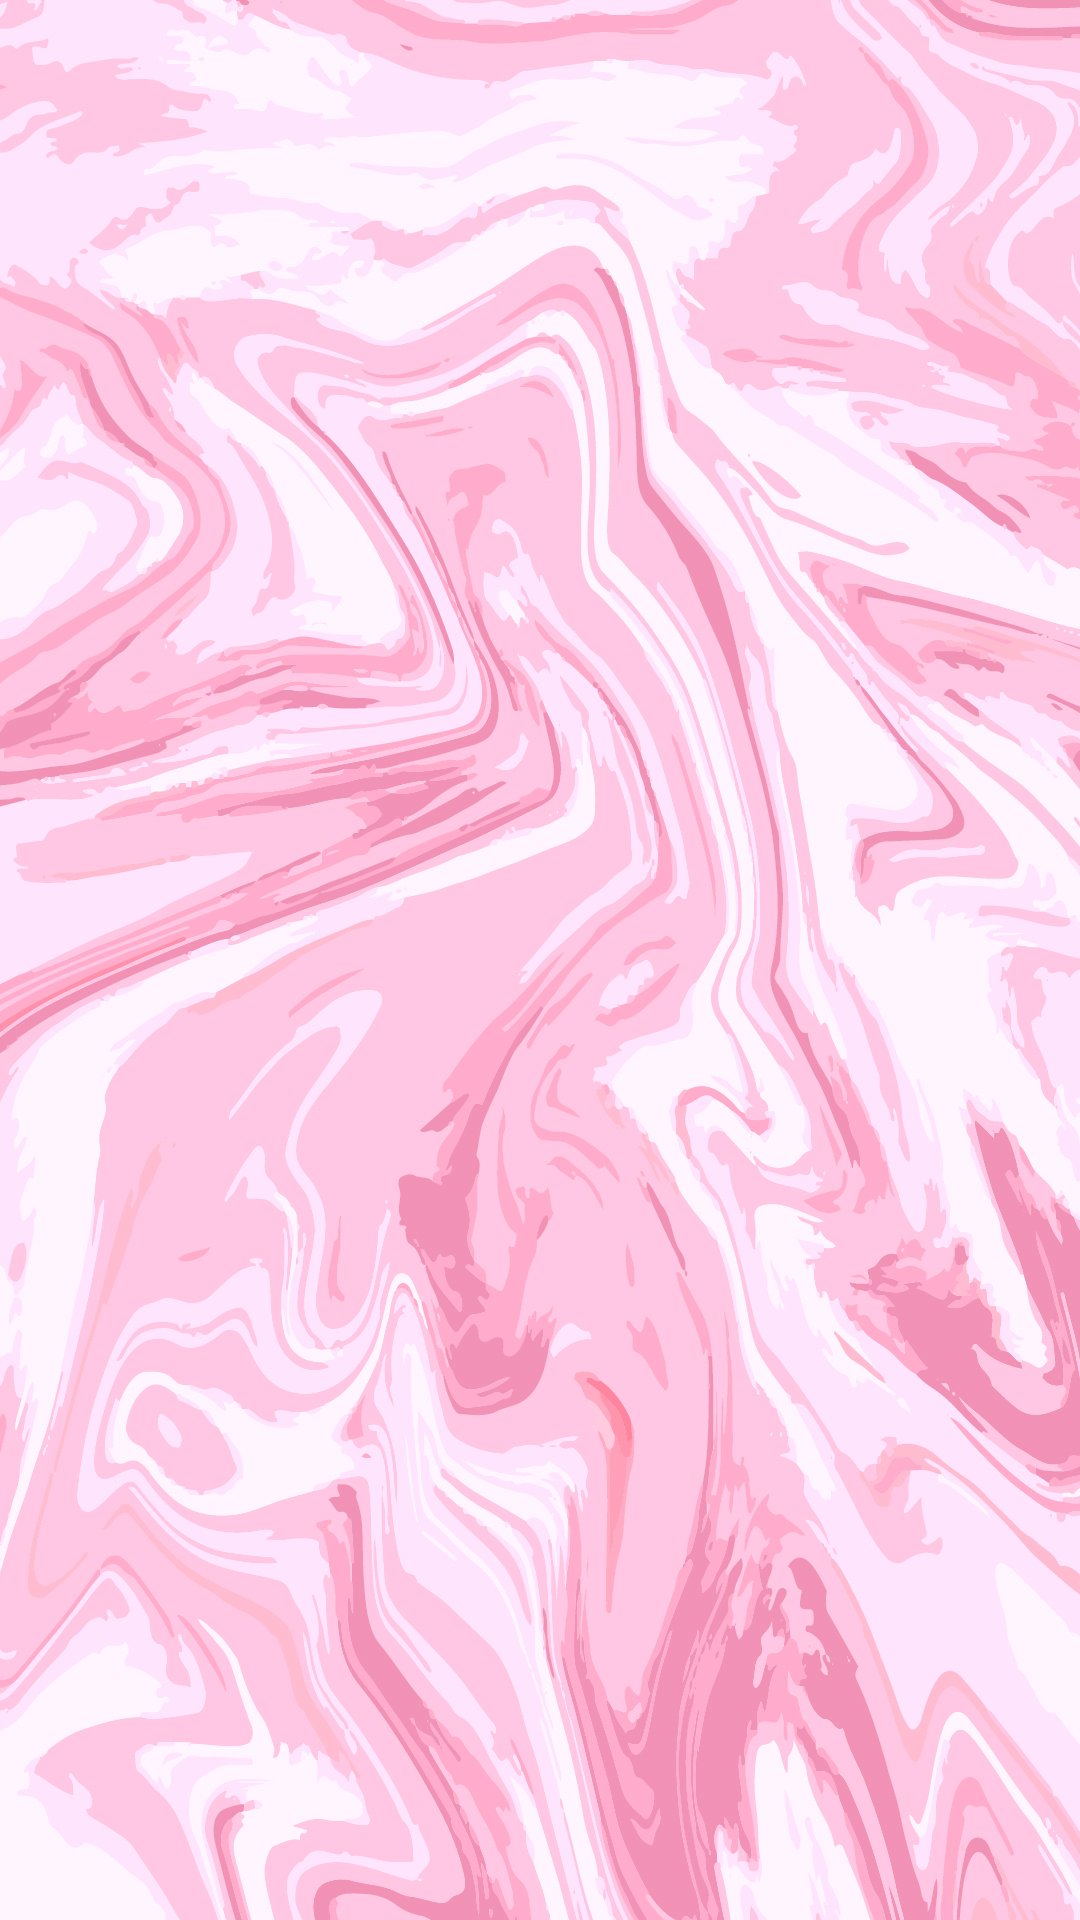 Free Pink Marble iPhone Background - EPS, Illustrator, JPG, SVG ...